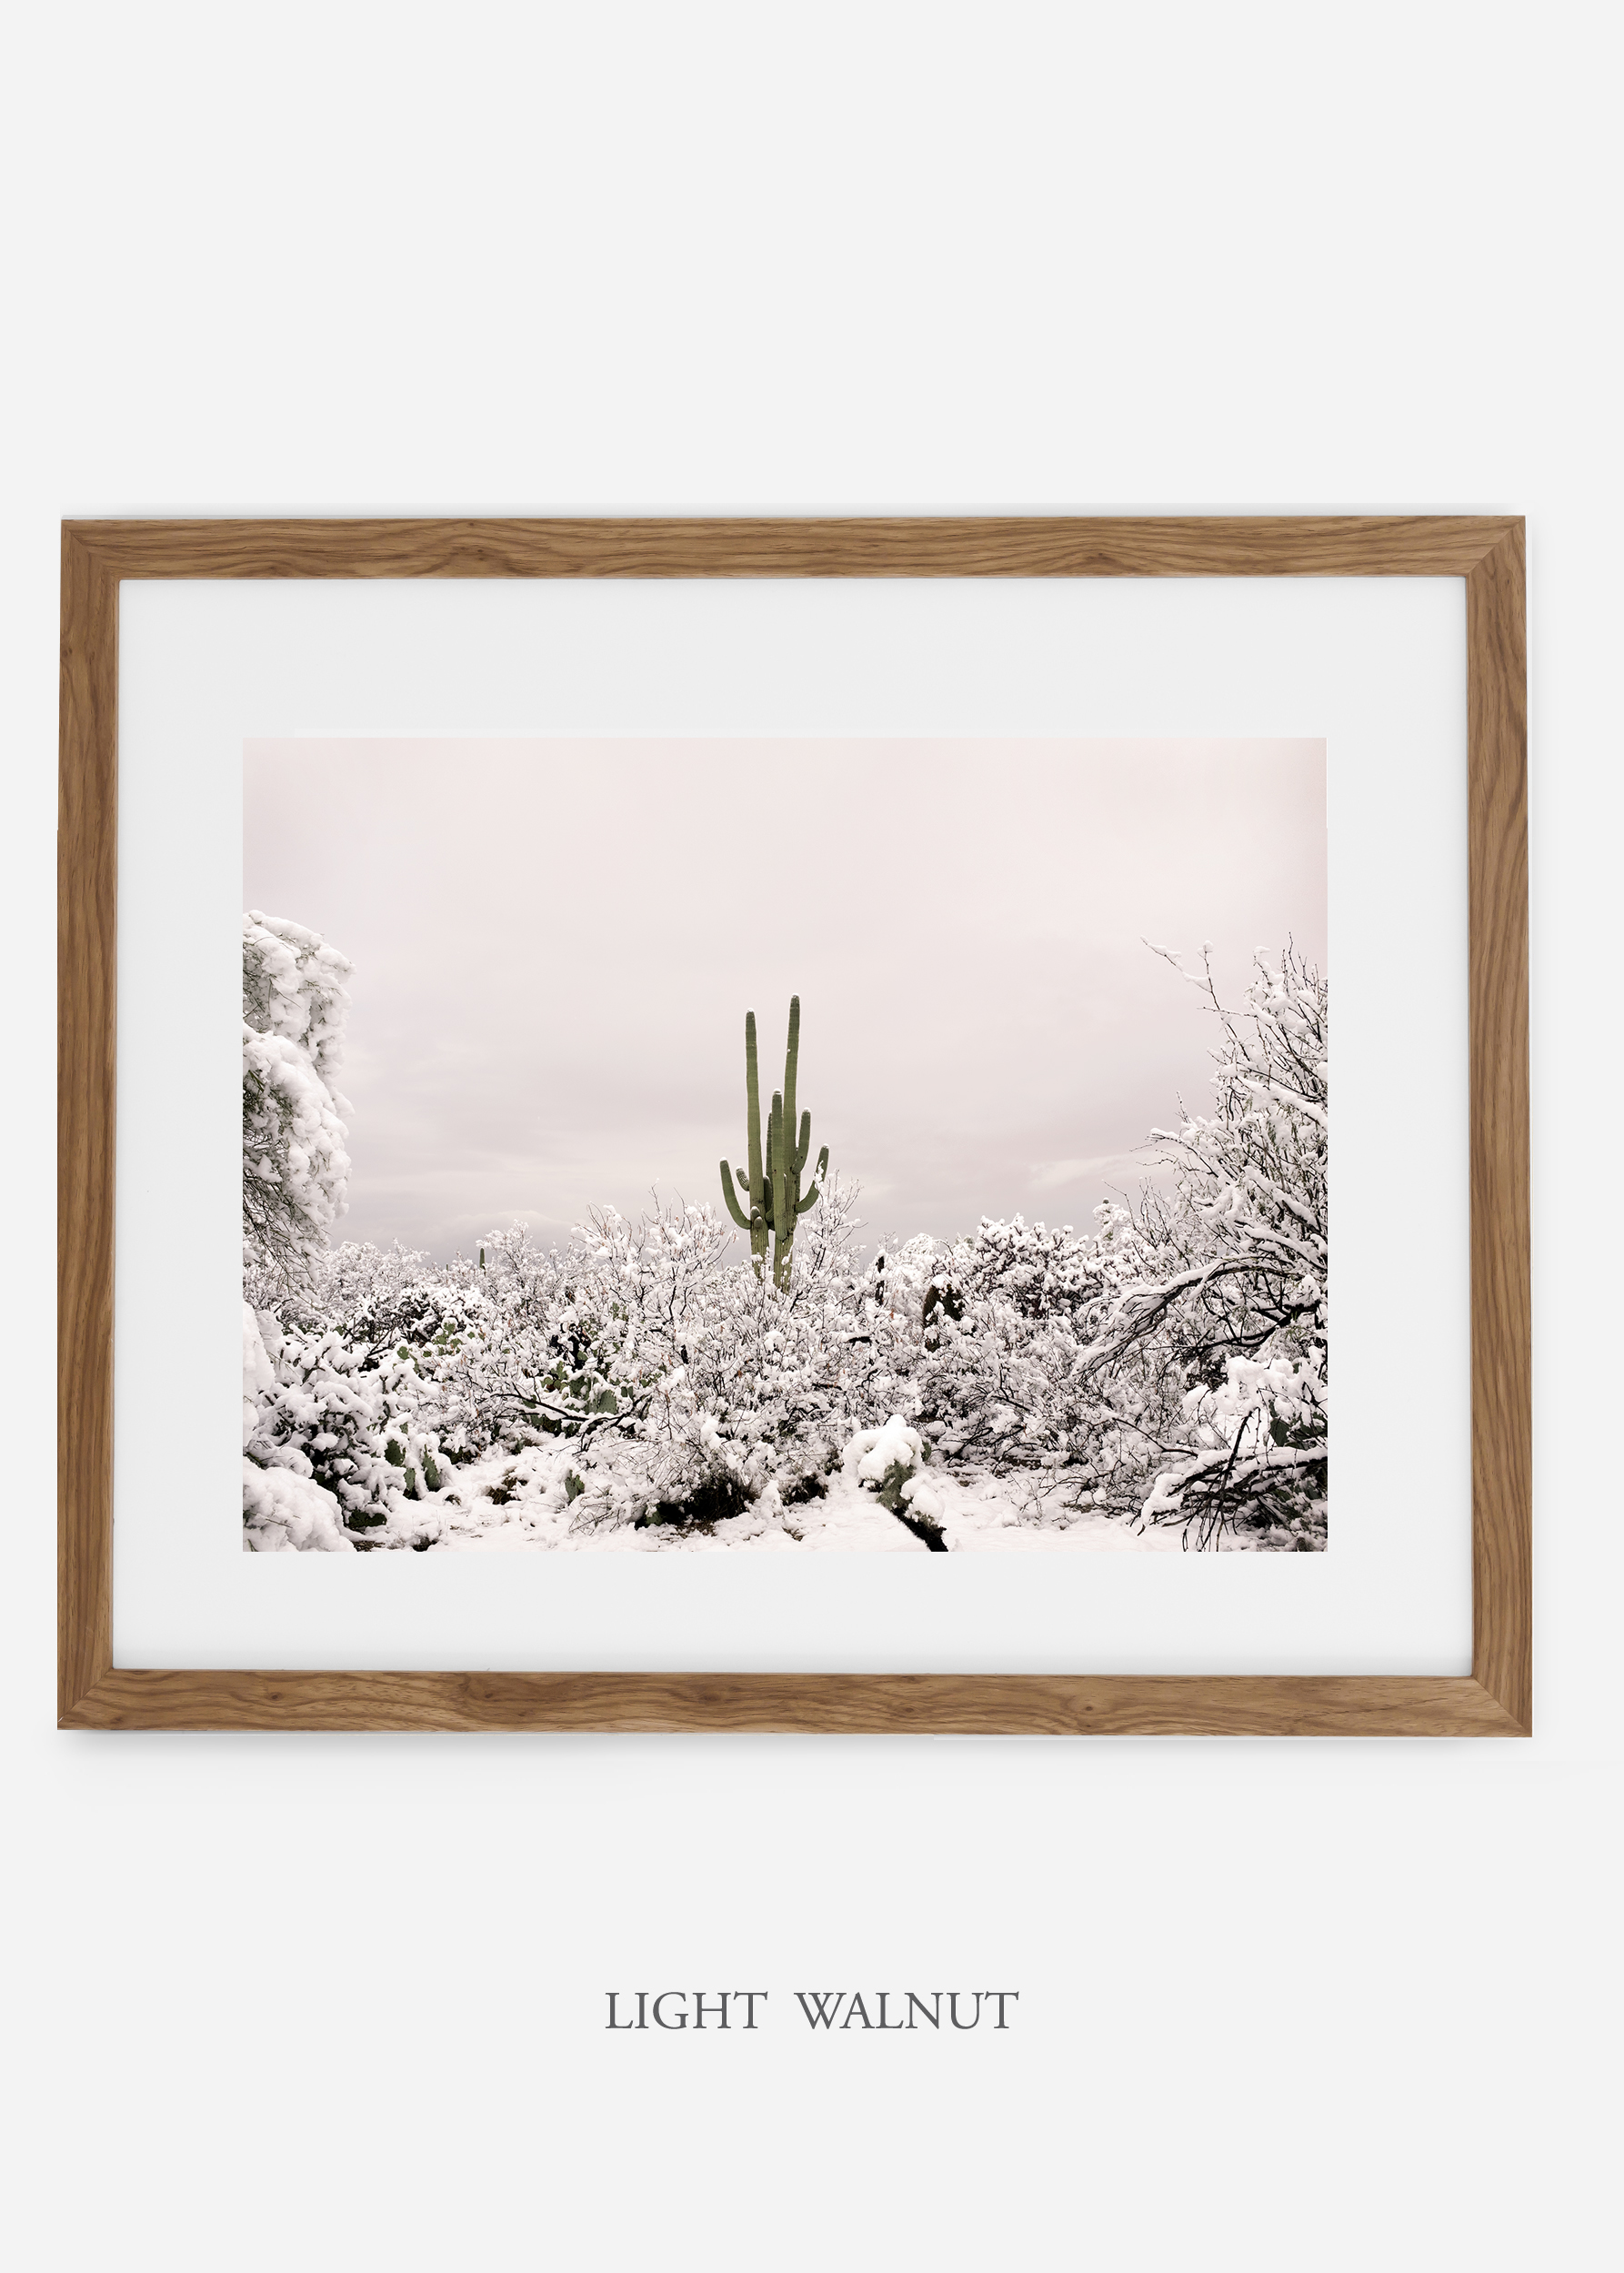 lightwalnutframe-saguaroNo.1-wildercalifornia-art-wallart-cactusprint-homedecor-prints-arizona-botanical-artwork-interiordesign.jpg